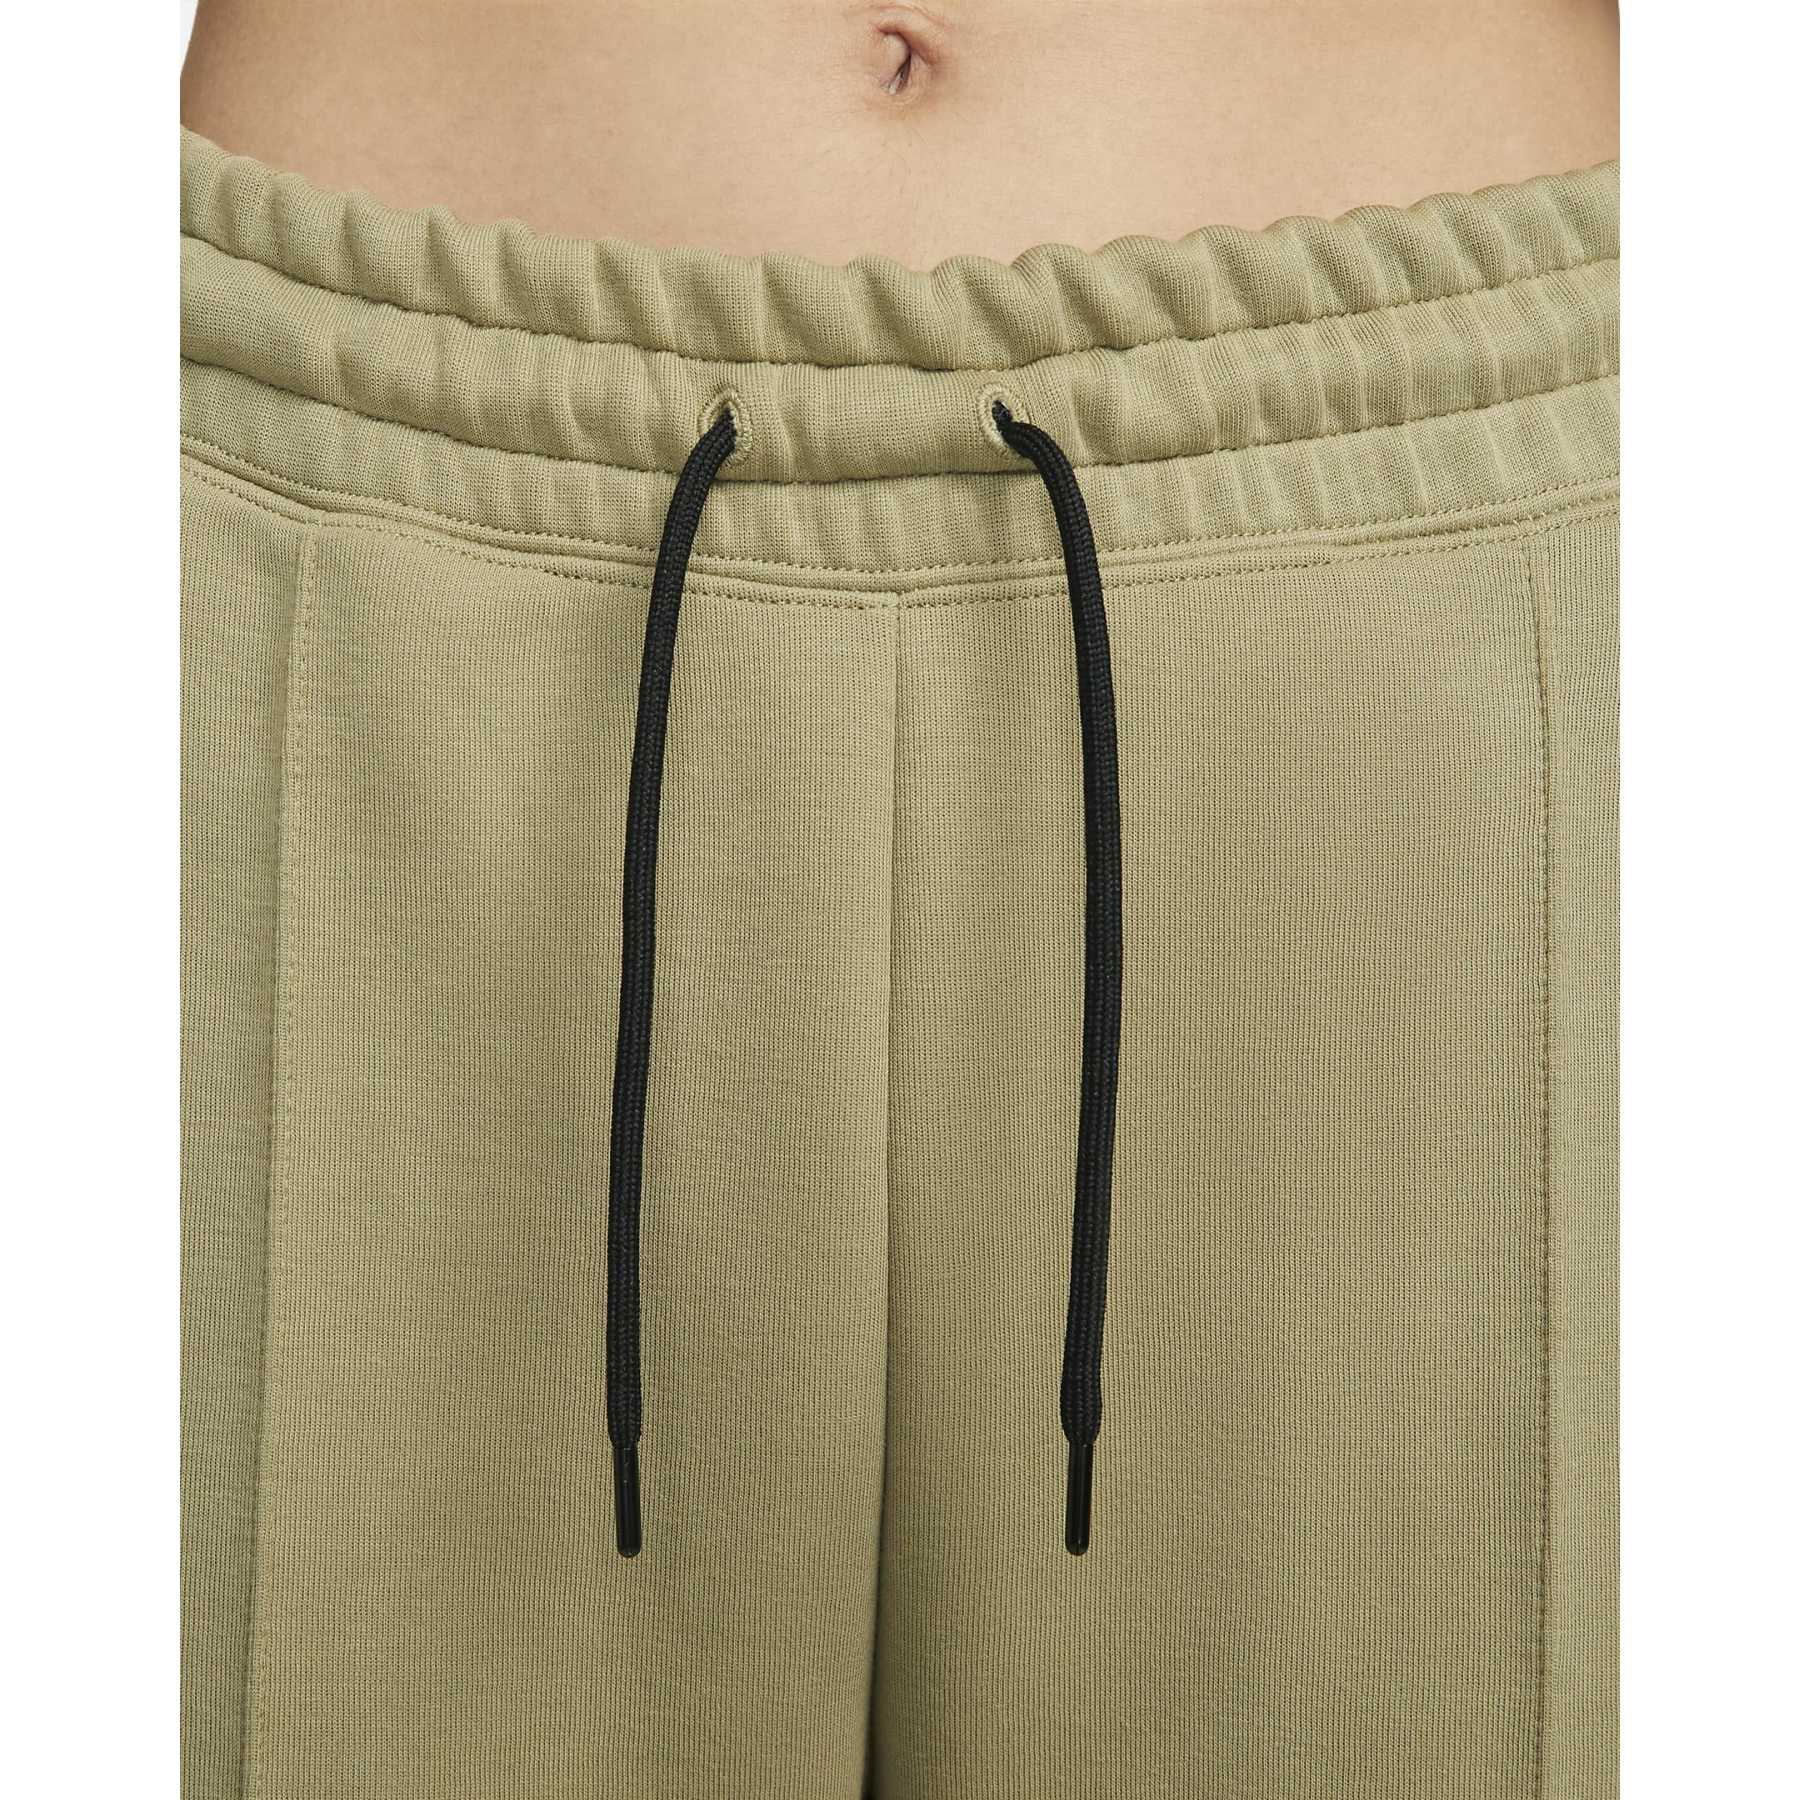 Nike Pantalon Chandal Mujer - Sportswear Tech Fleece - neutral olive/black  FB8330-276